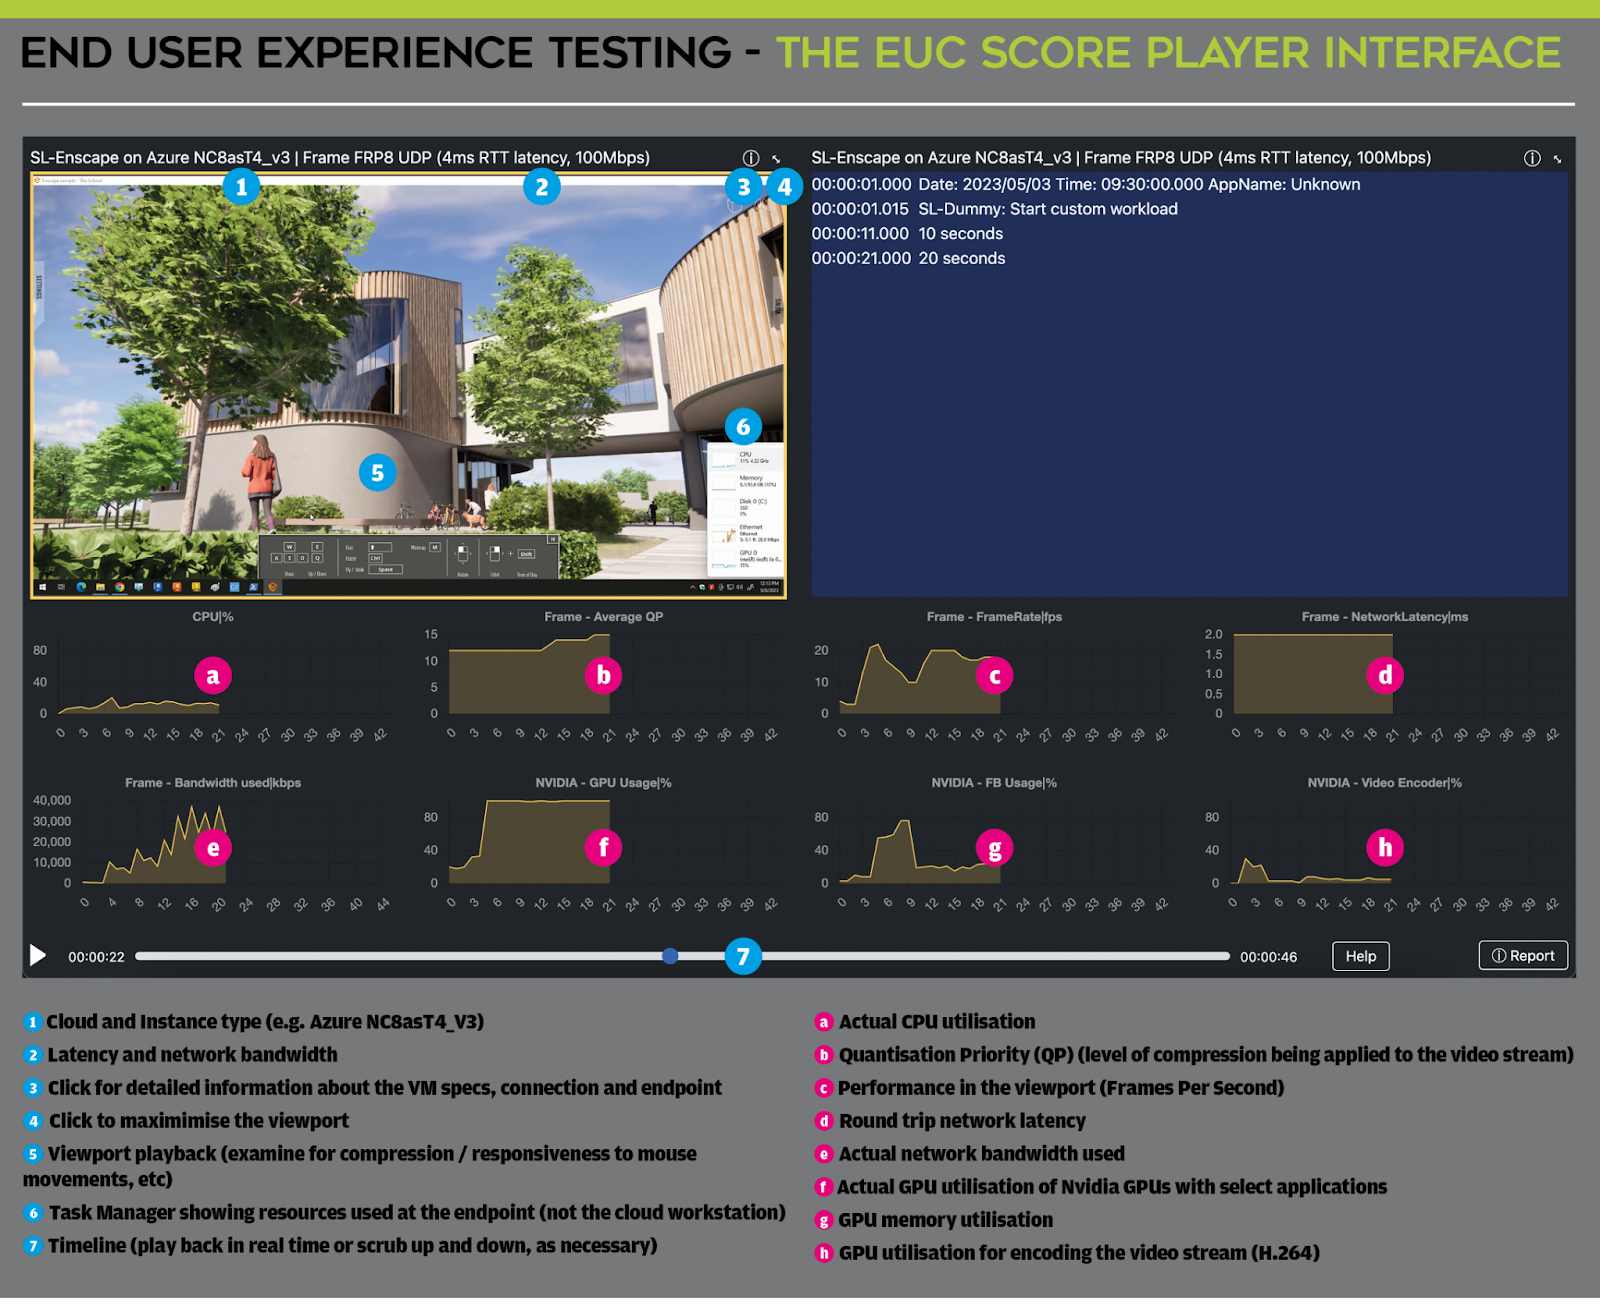 The EUC Score Player Interface